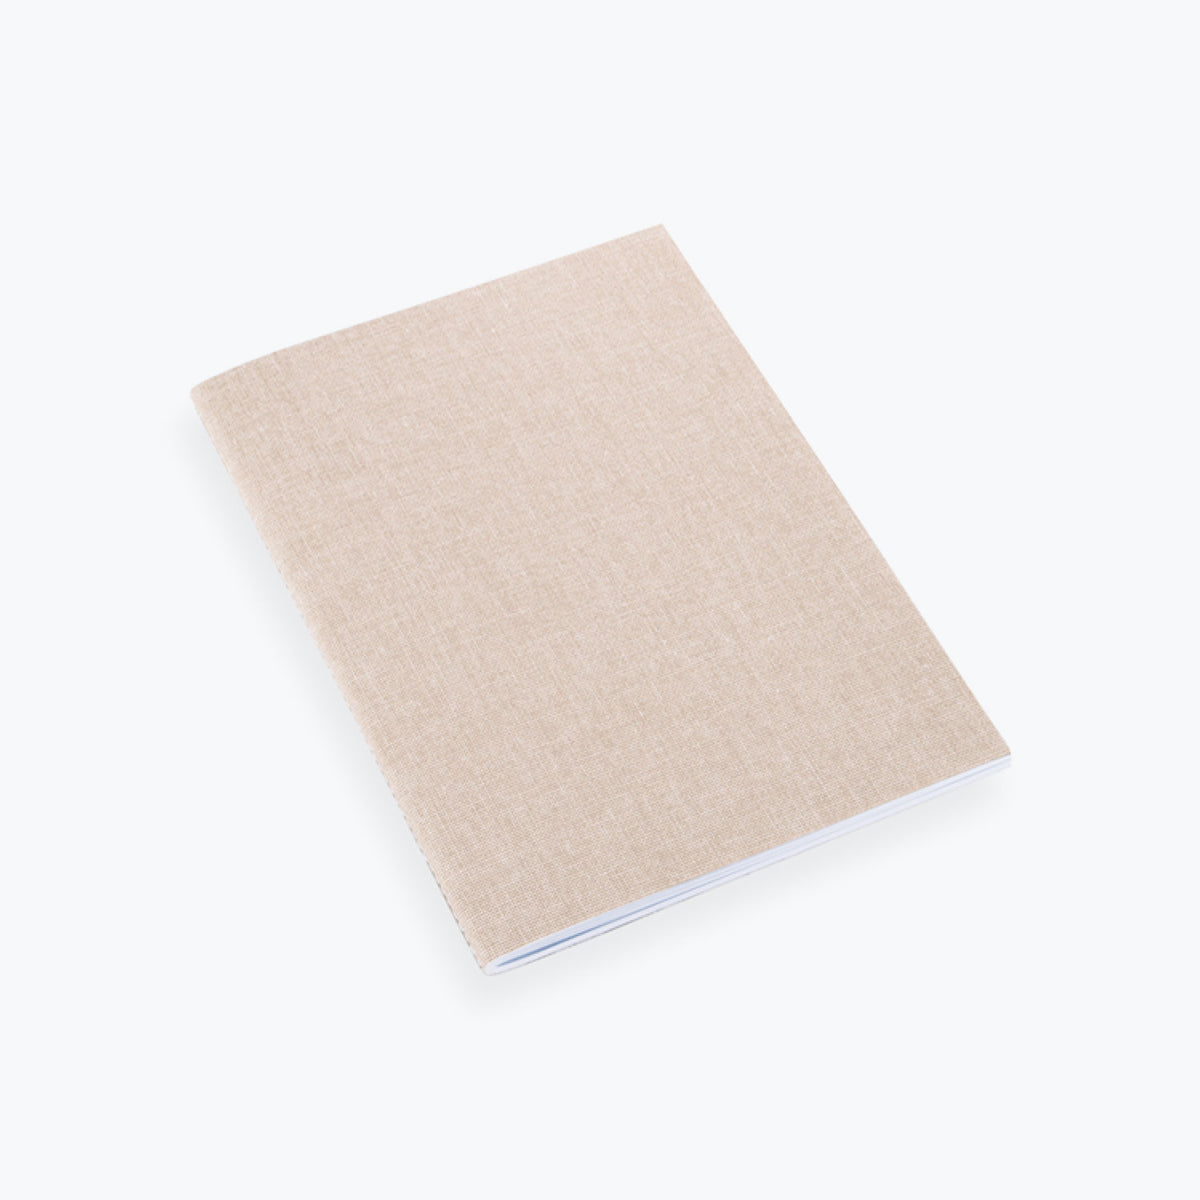 Bookbinders Design - Notebook - Stitched - A5 - Sandbrown